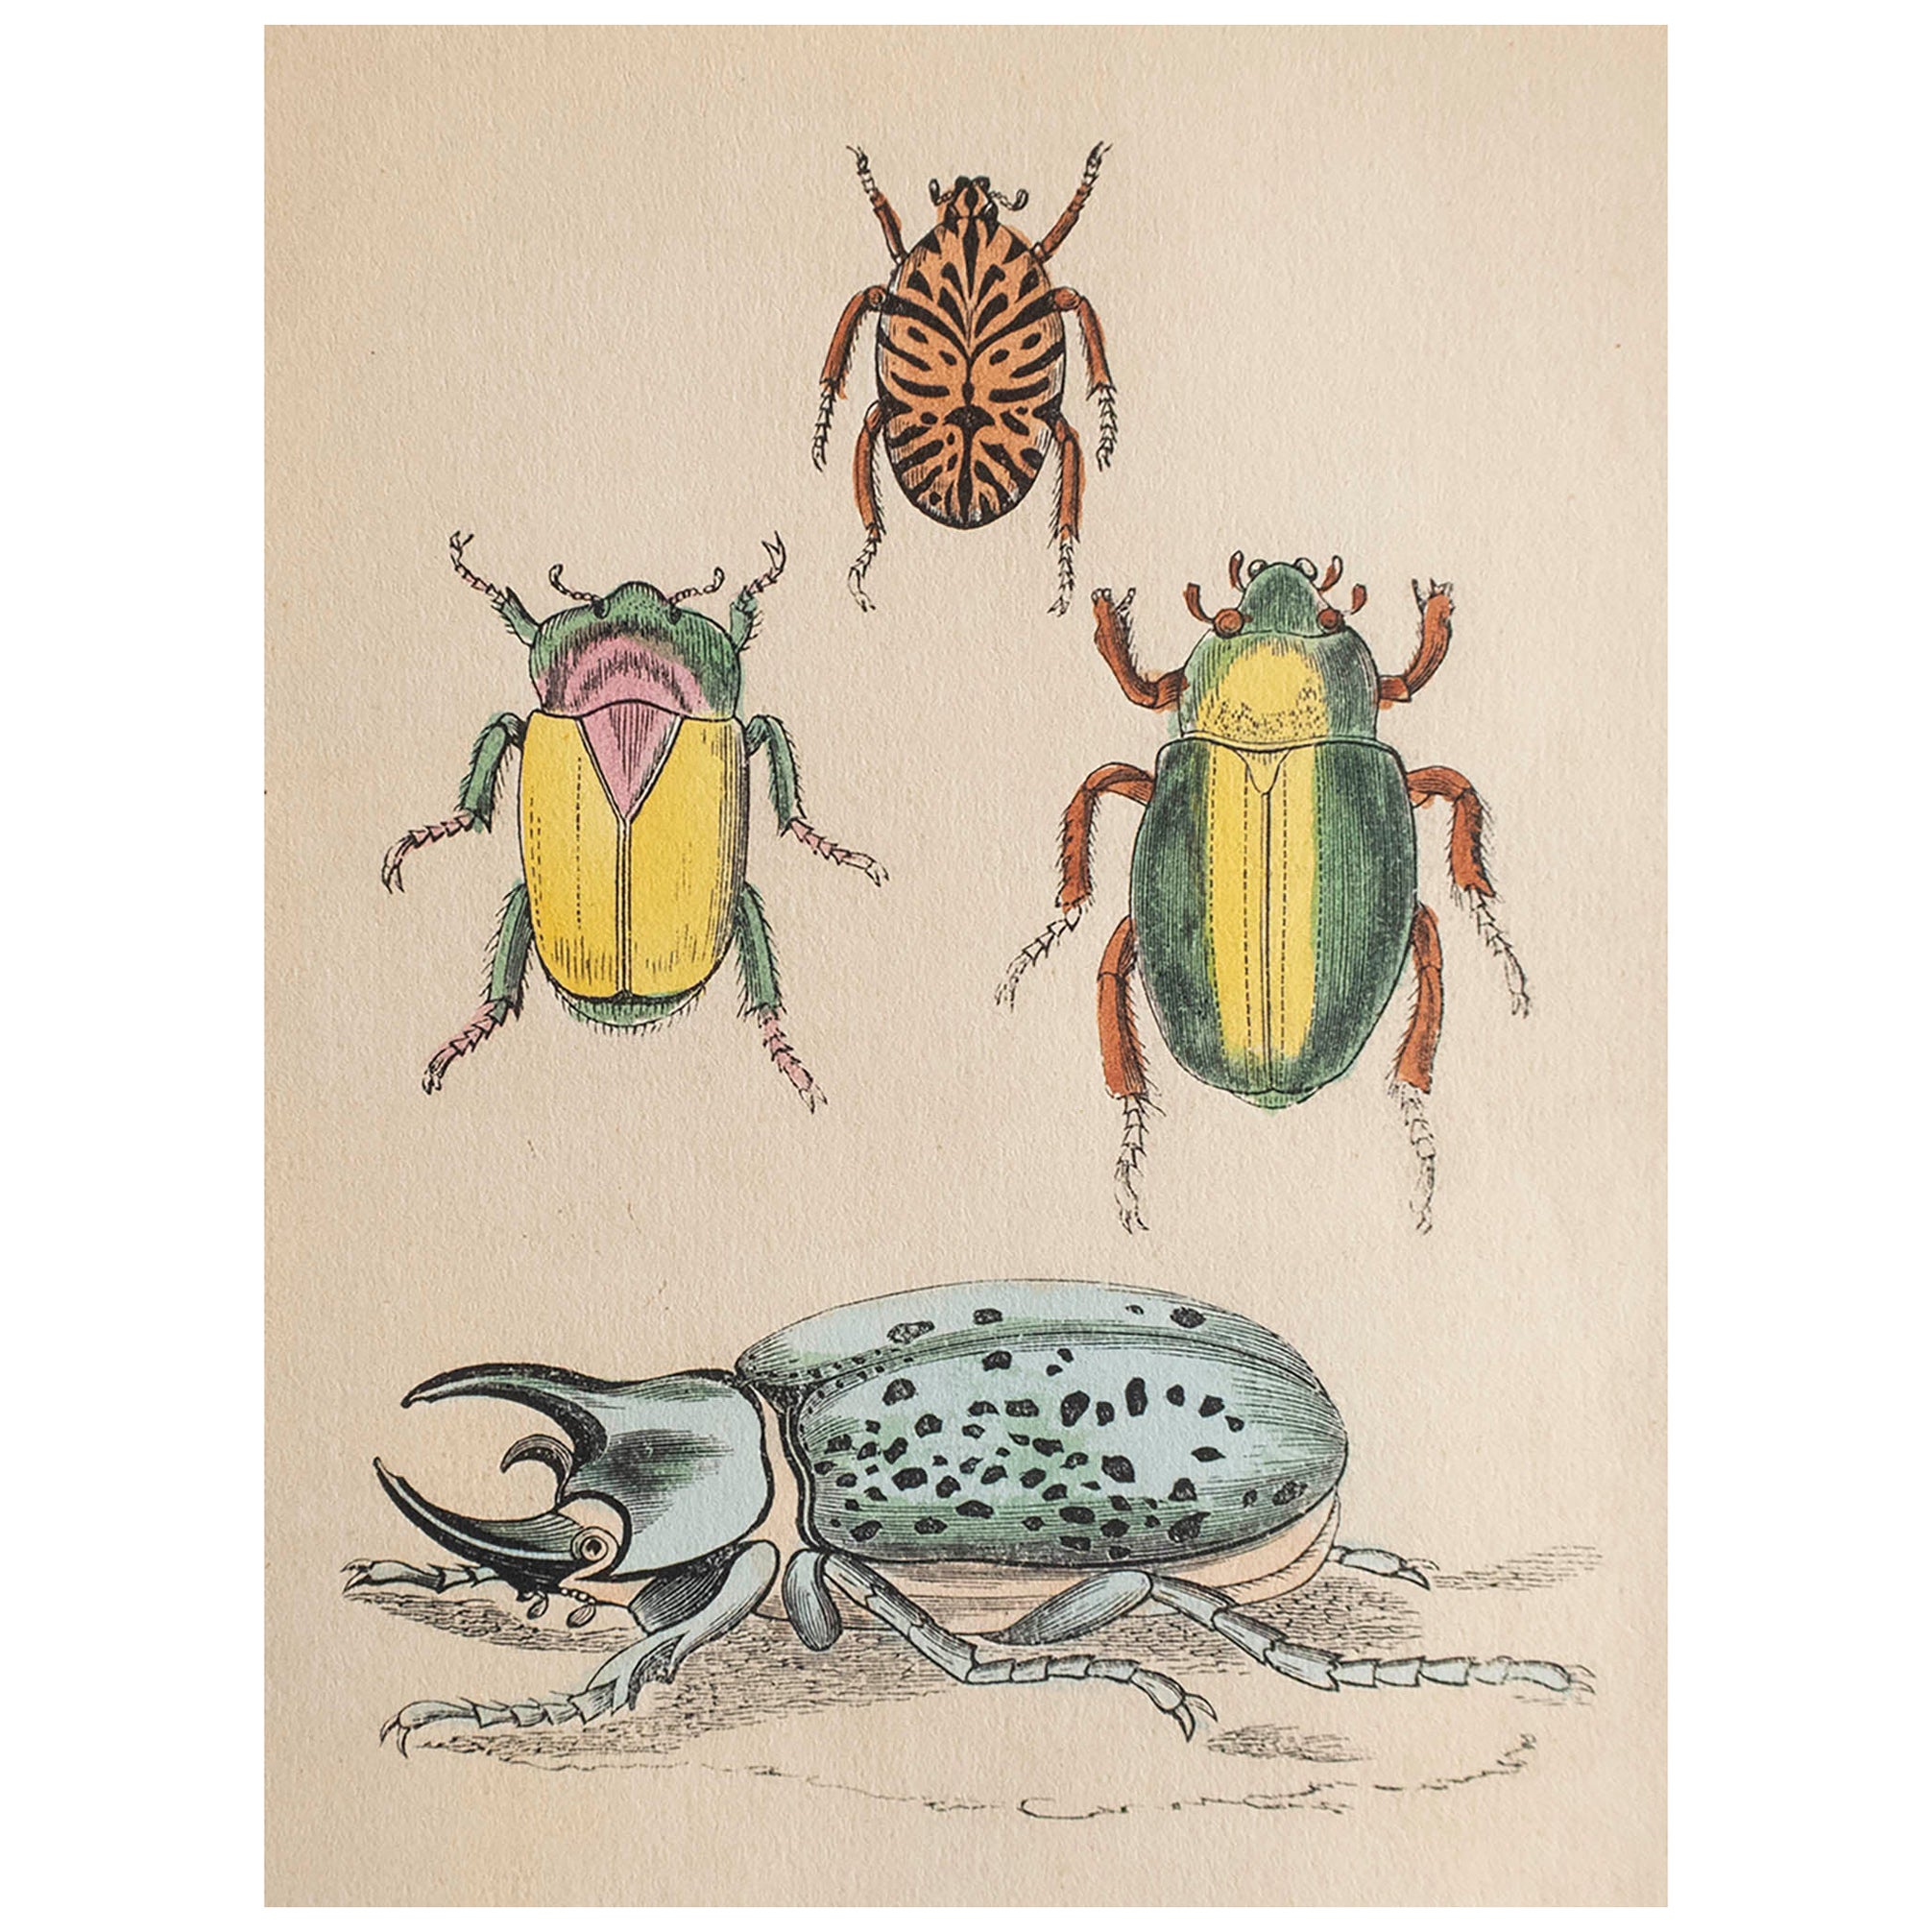  Original Antique Print of Beetles, circa 1850